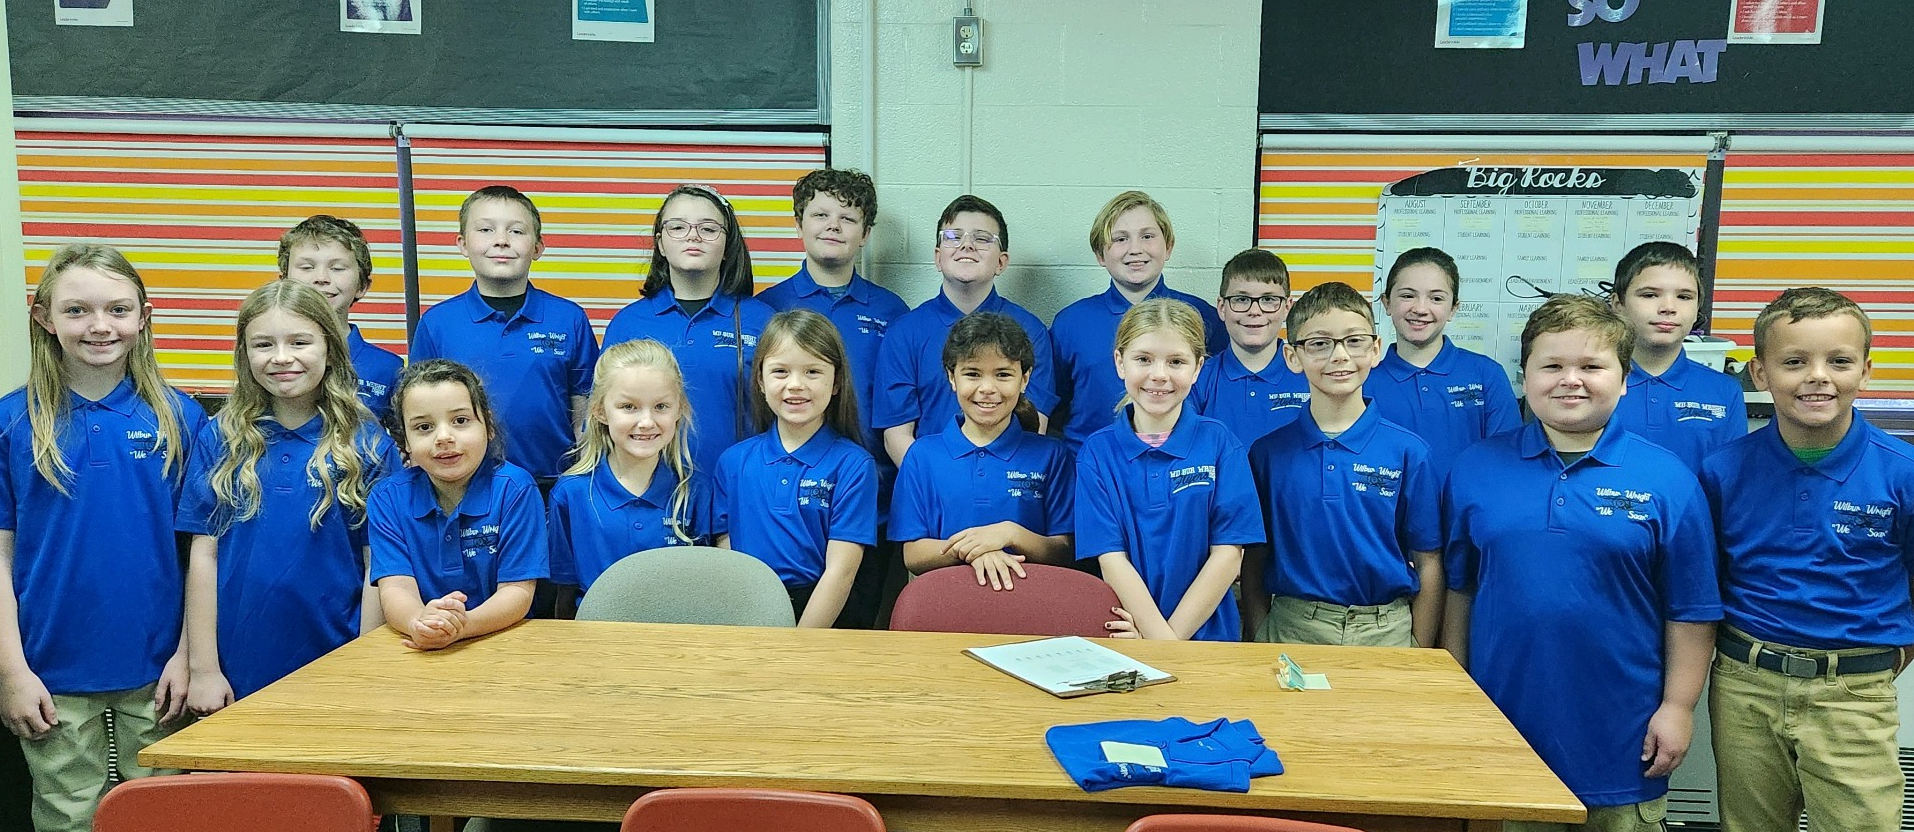 Leadership Day, students wearing blue shirts